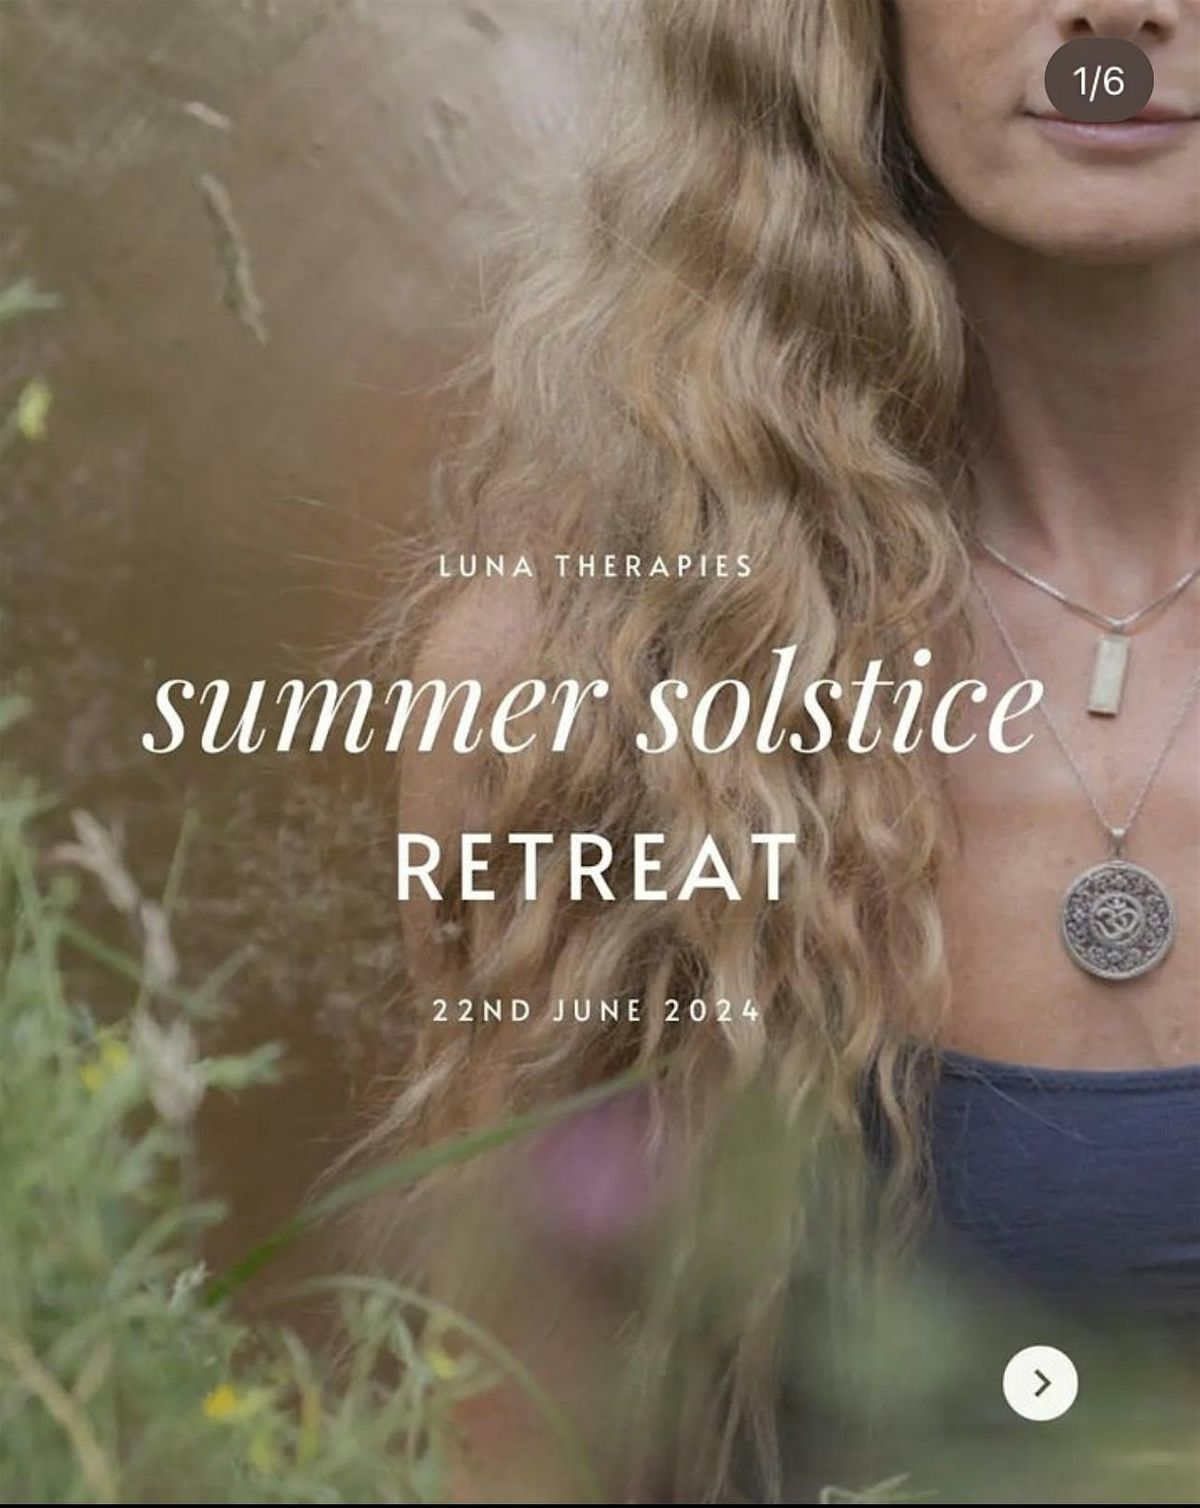 Summer Solstice Retreat